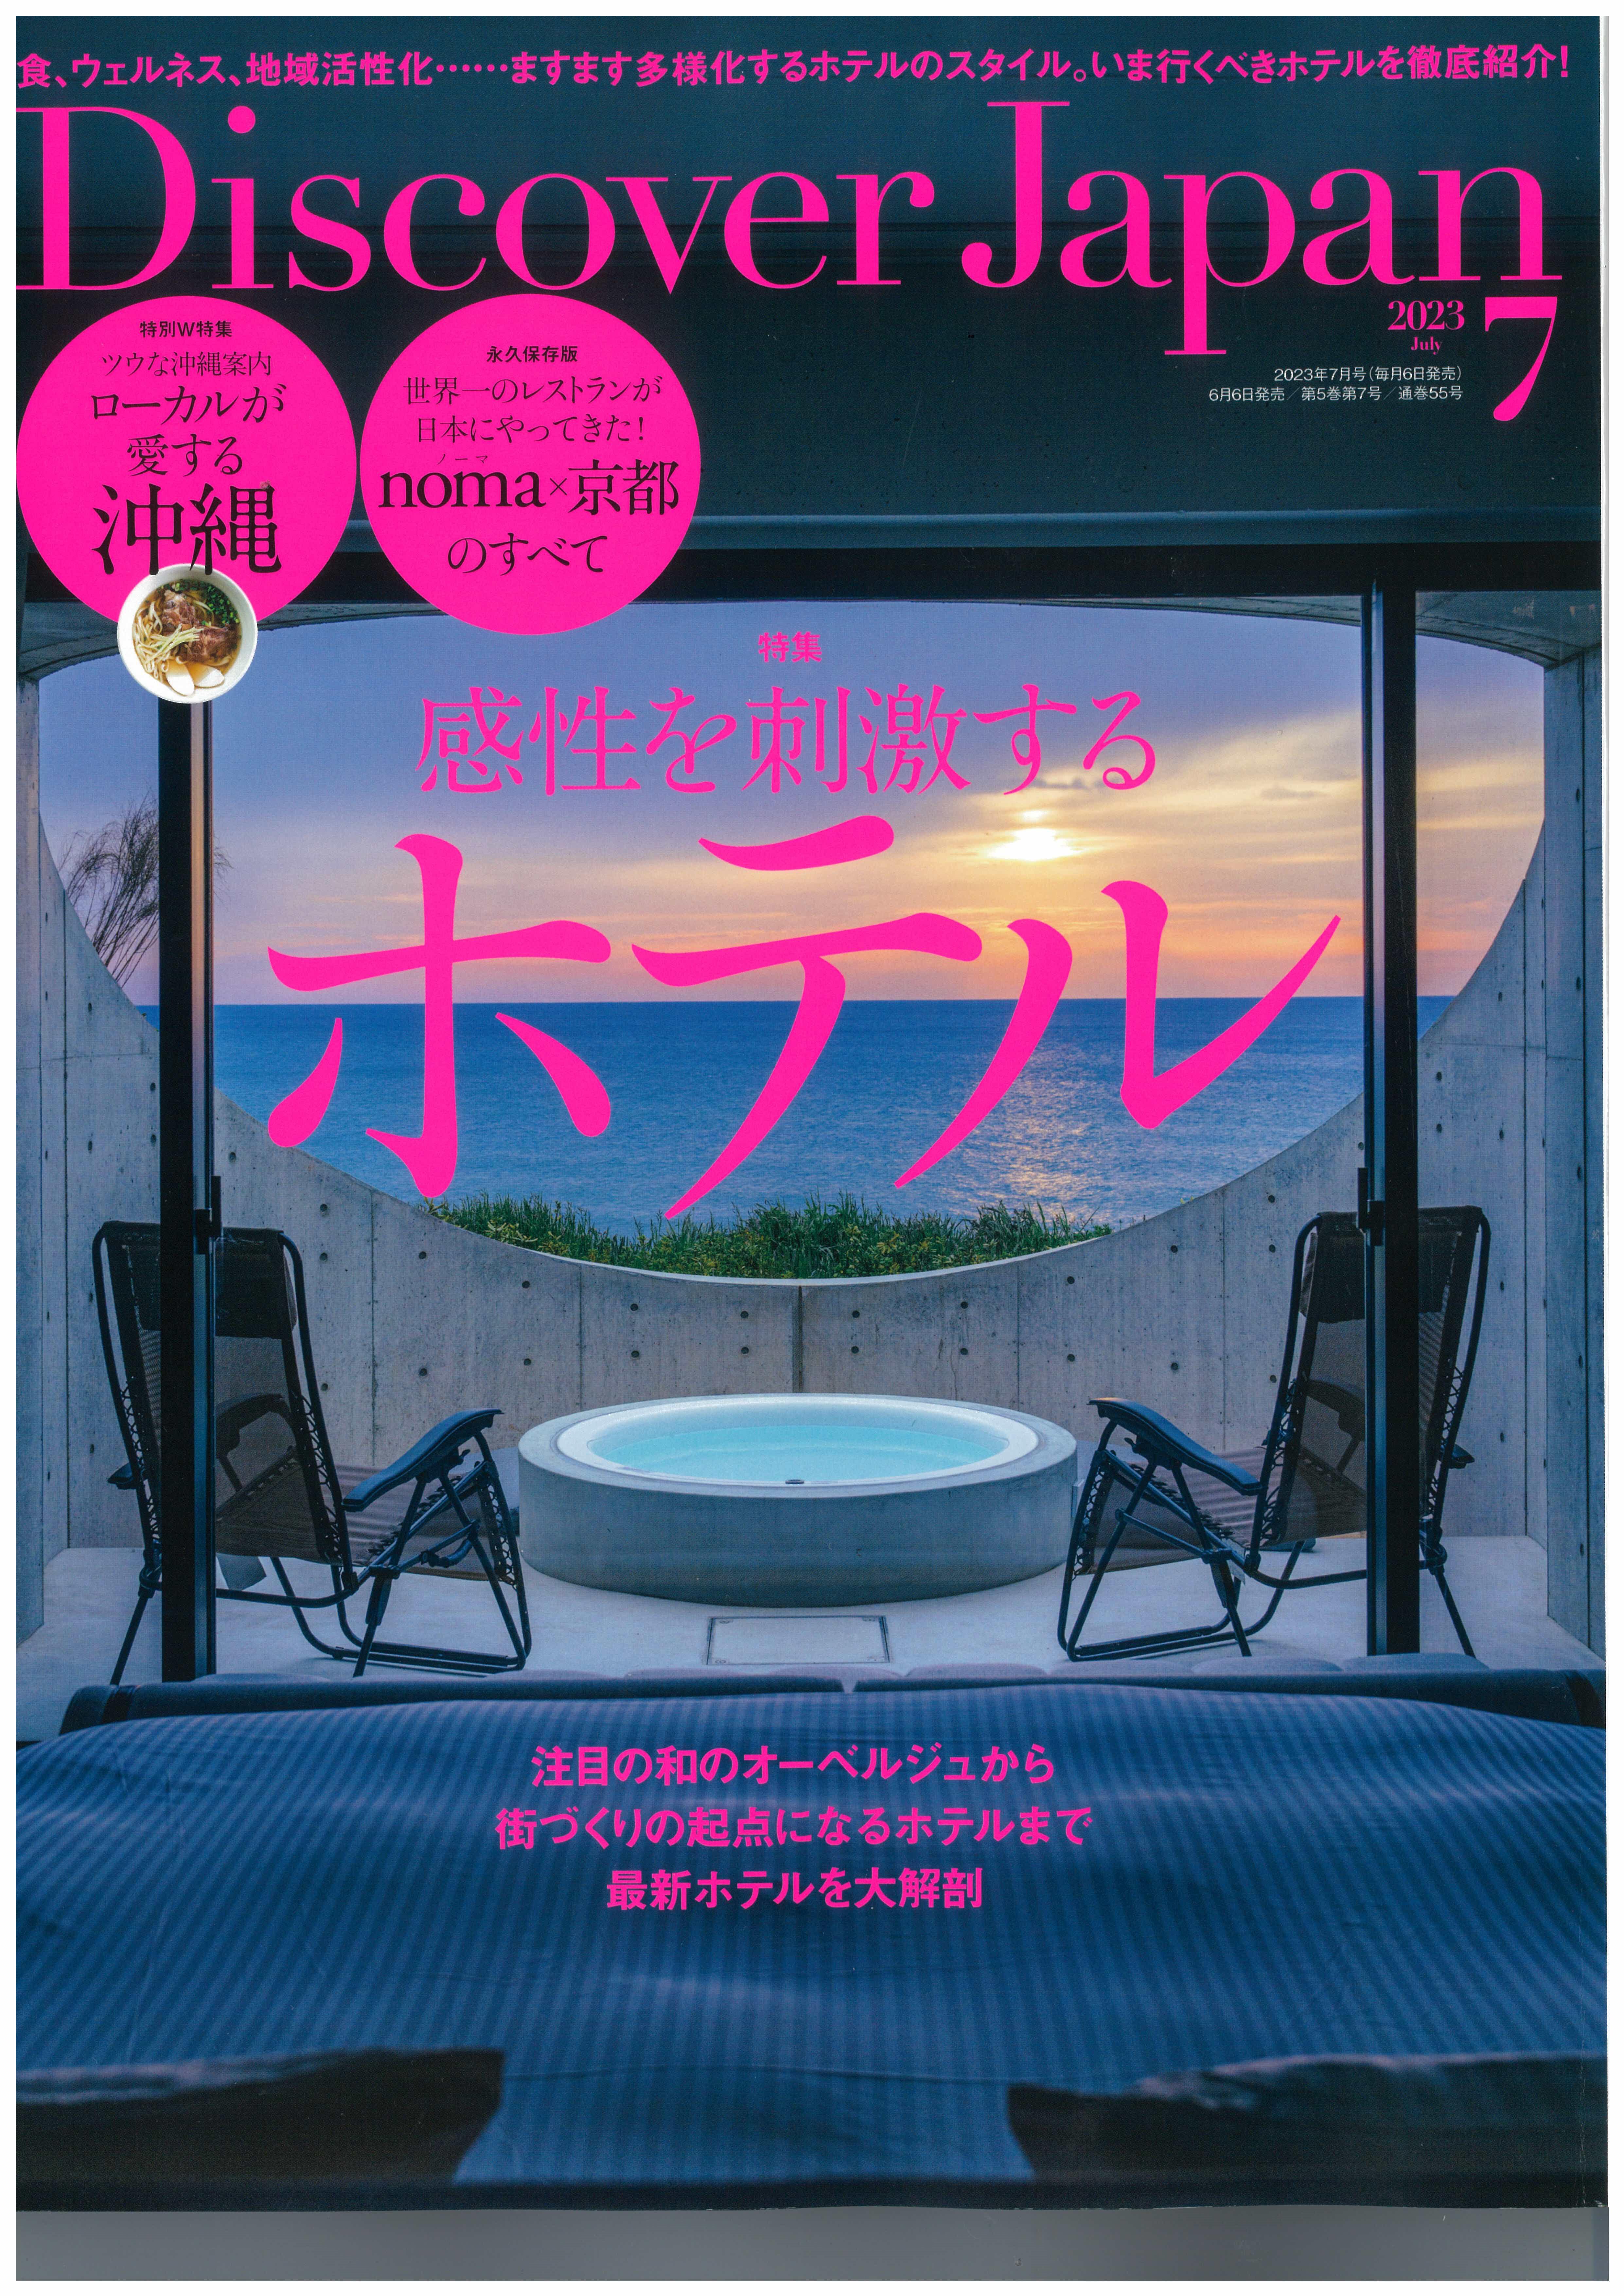 6/6「Discover Japan 7月号」に掲載されました